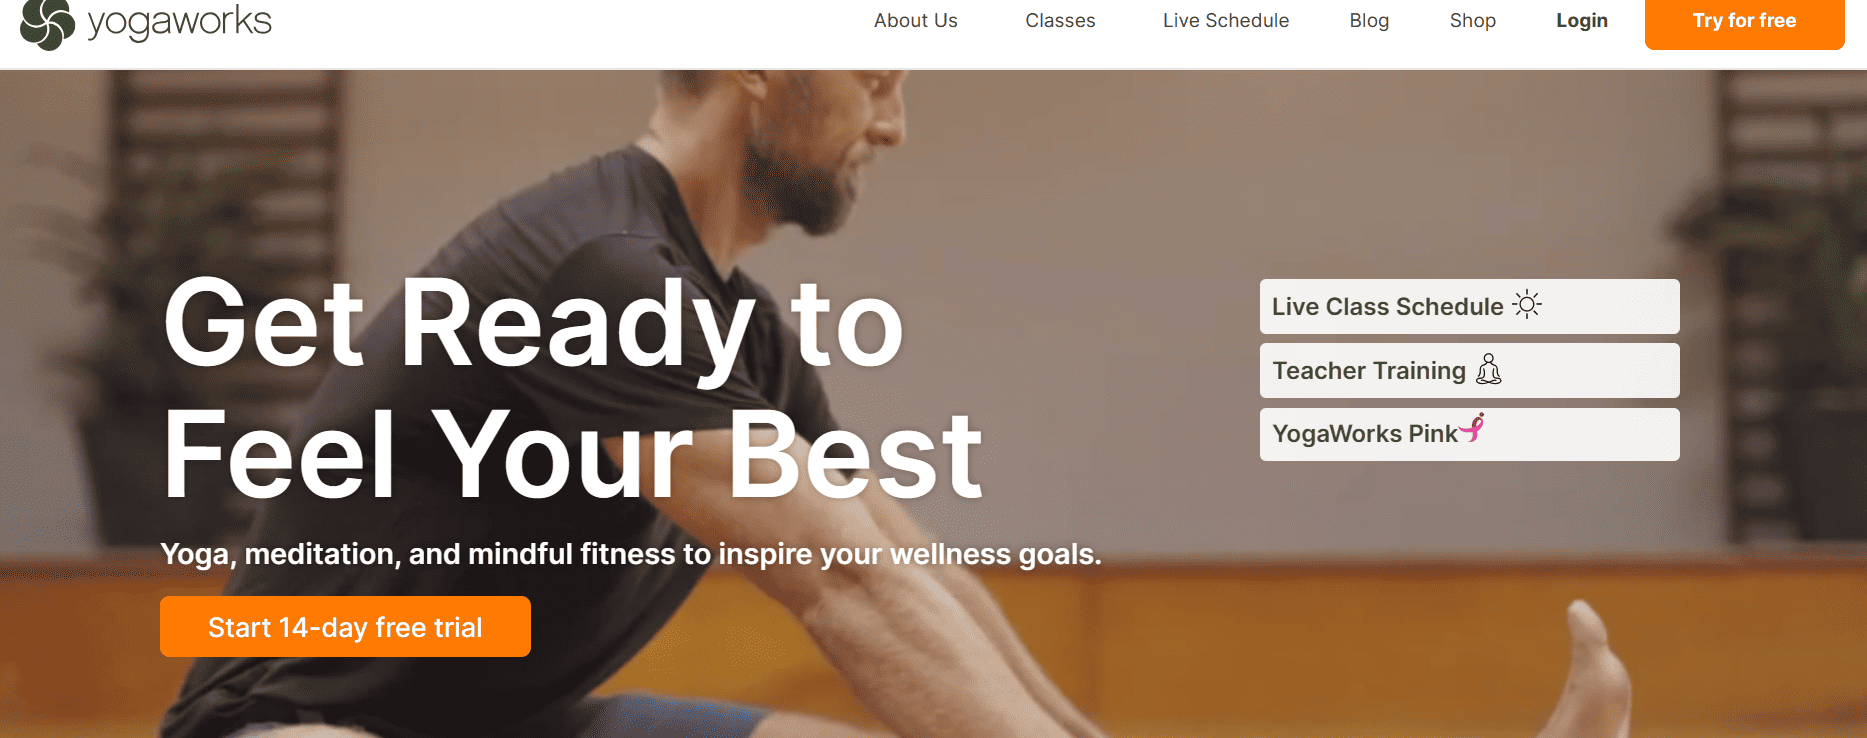 Yogaworks homepage